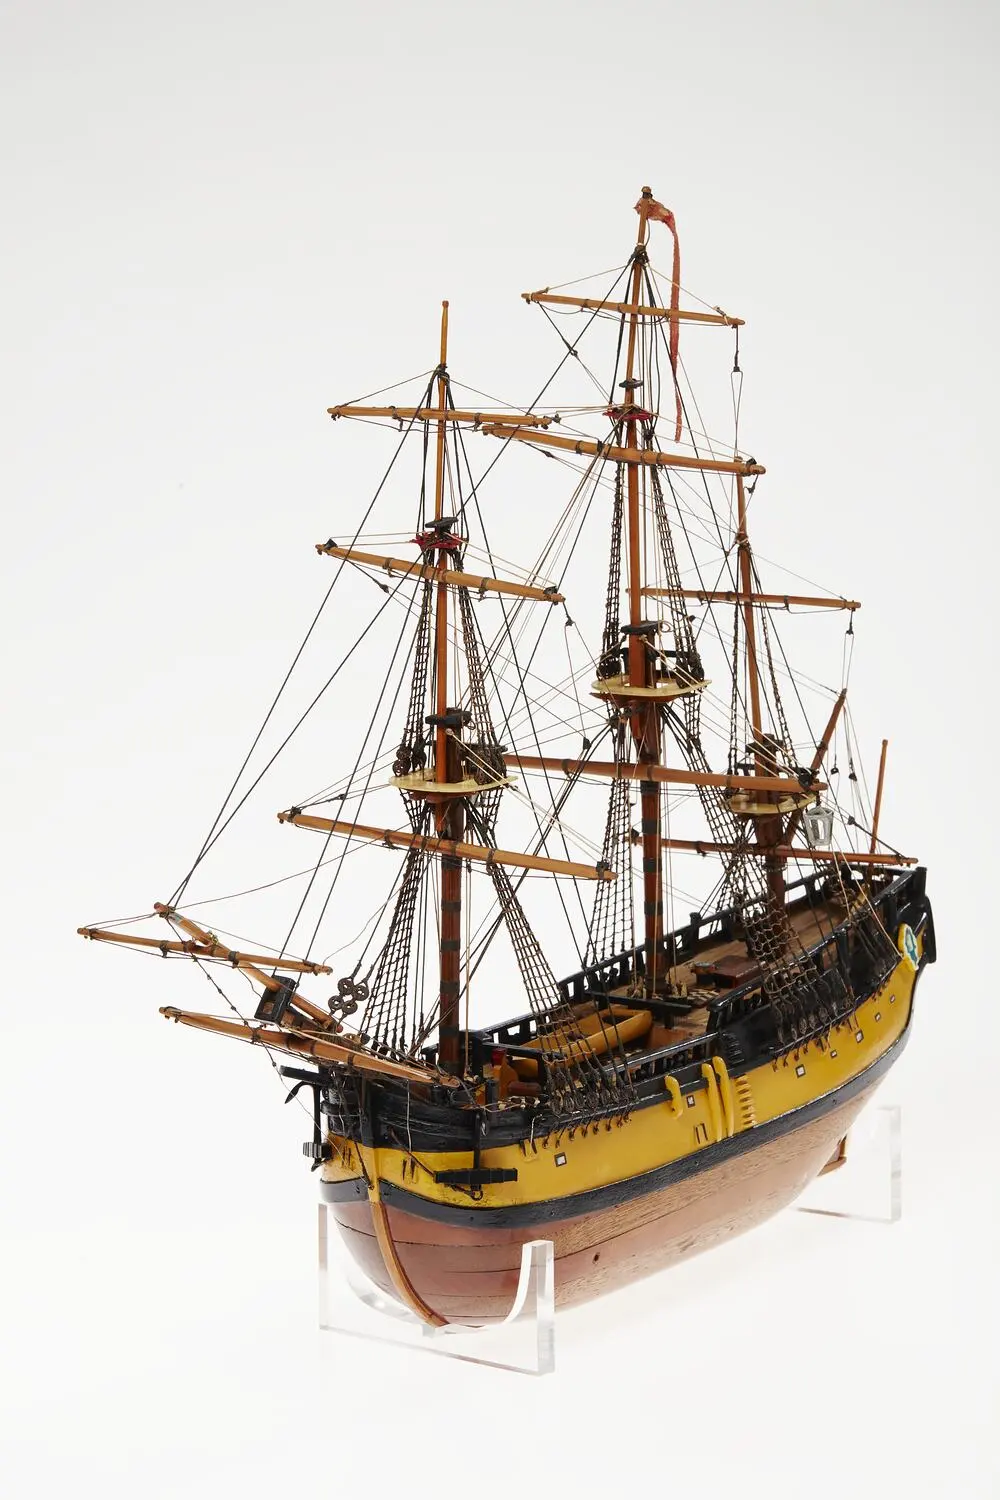 Sailing Ship Model - HM Bark Endeavour, 1768-1771